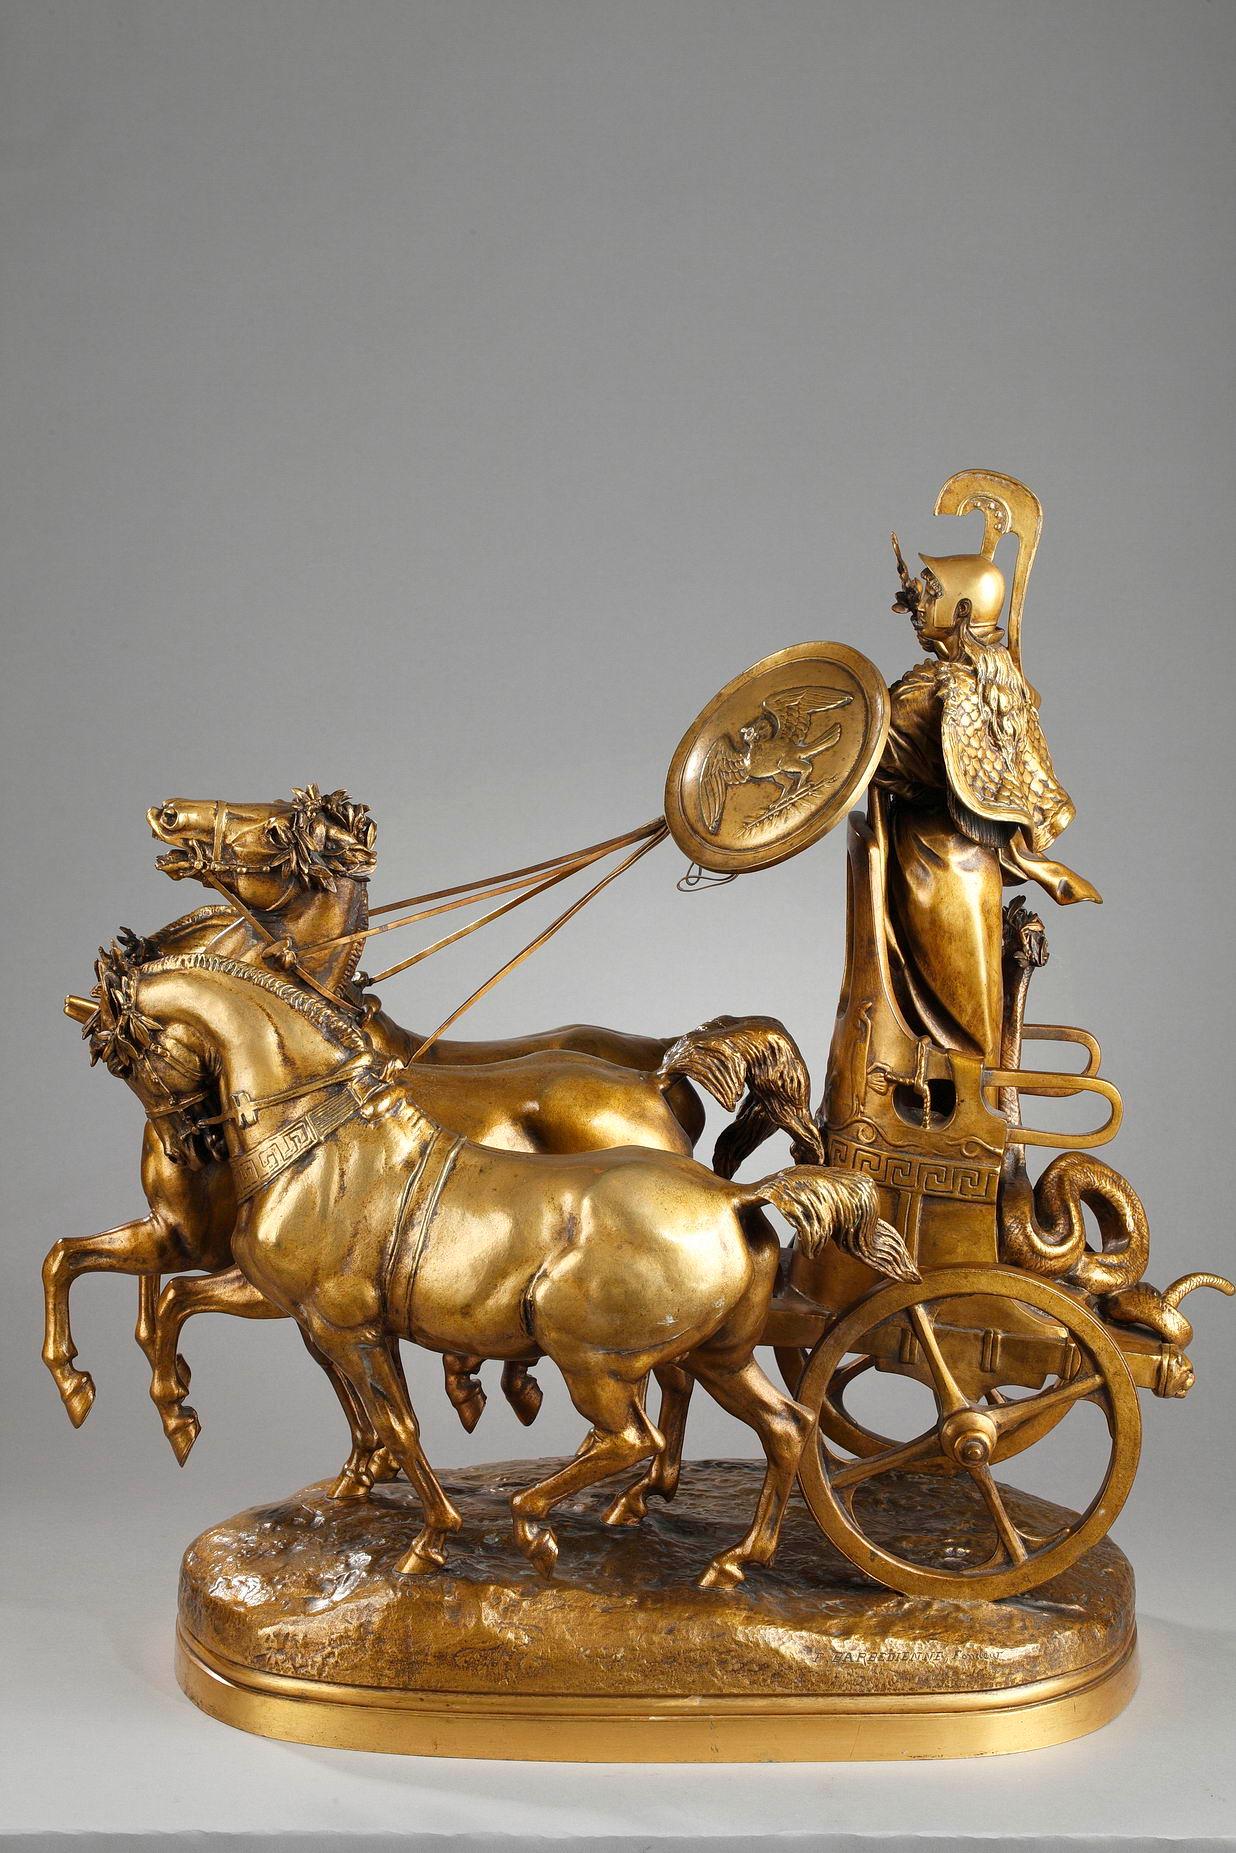 Emmanuel Fremiet Figurative Sculpture - Minerva driving her chariot